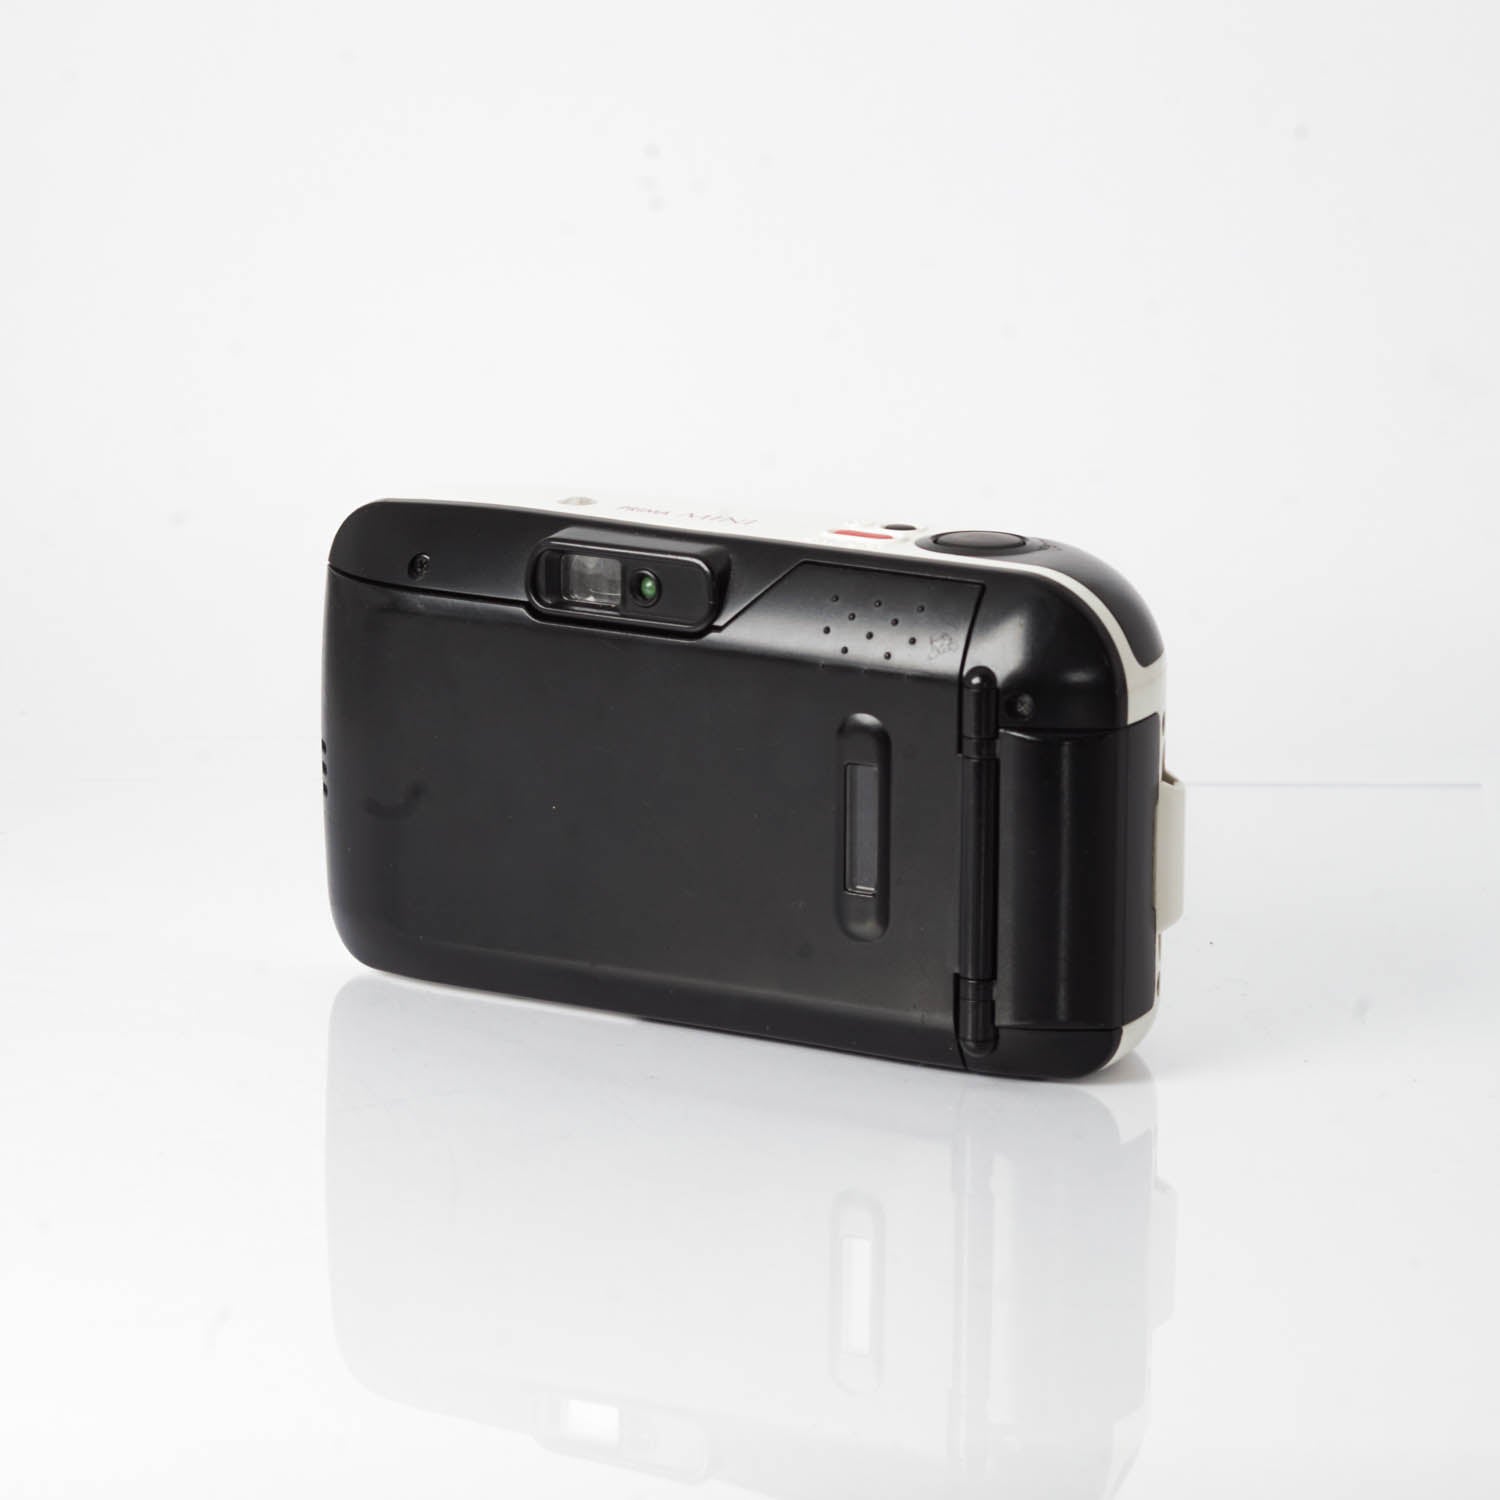 L'appareil photo Mini Instax disponible - Fujifilm Algerie